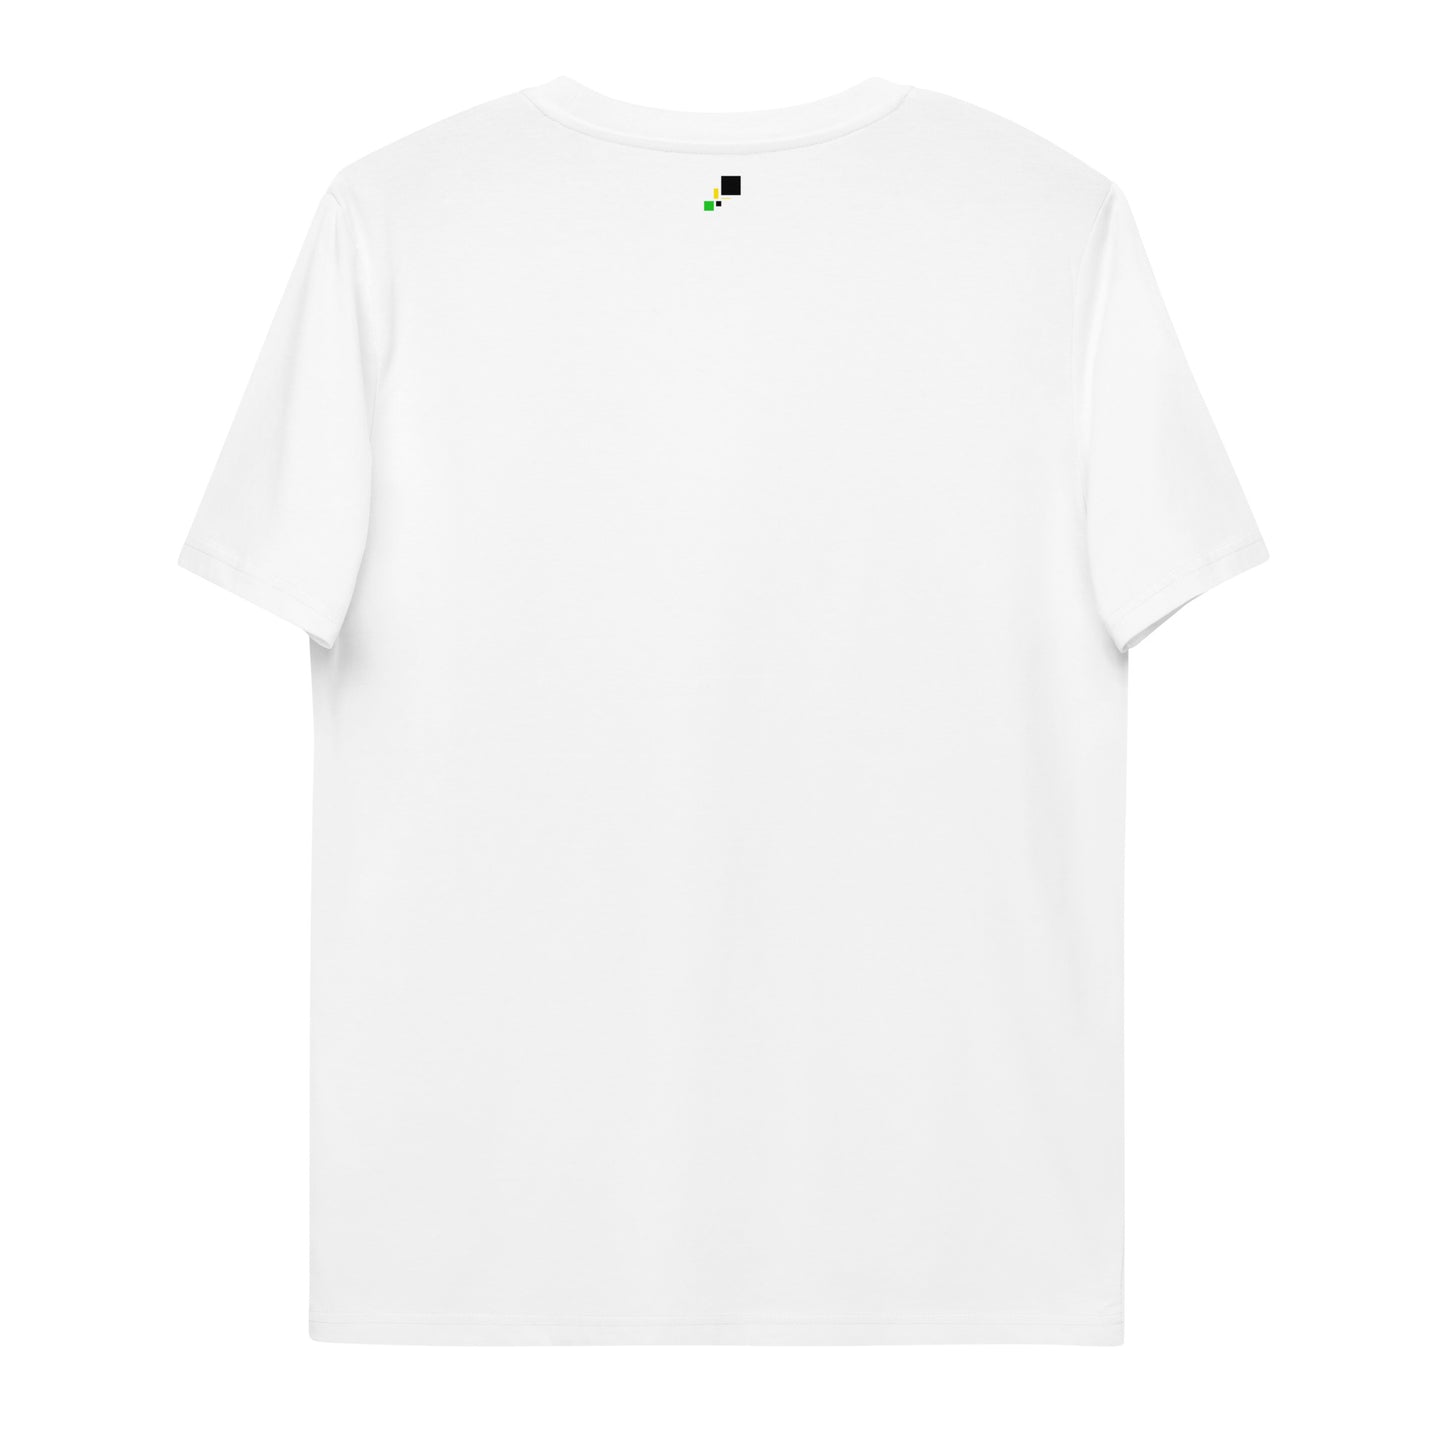 Sell it all Impact - Camiseta de algodón orgánico unisex